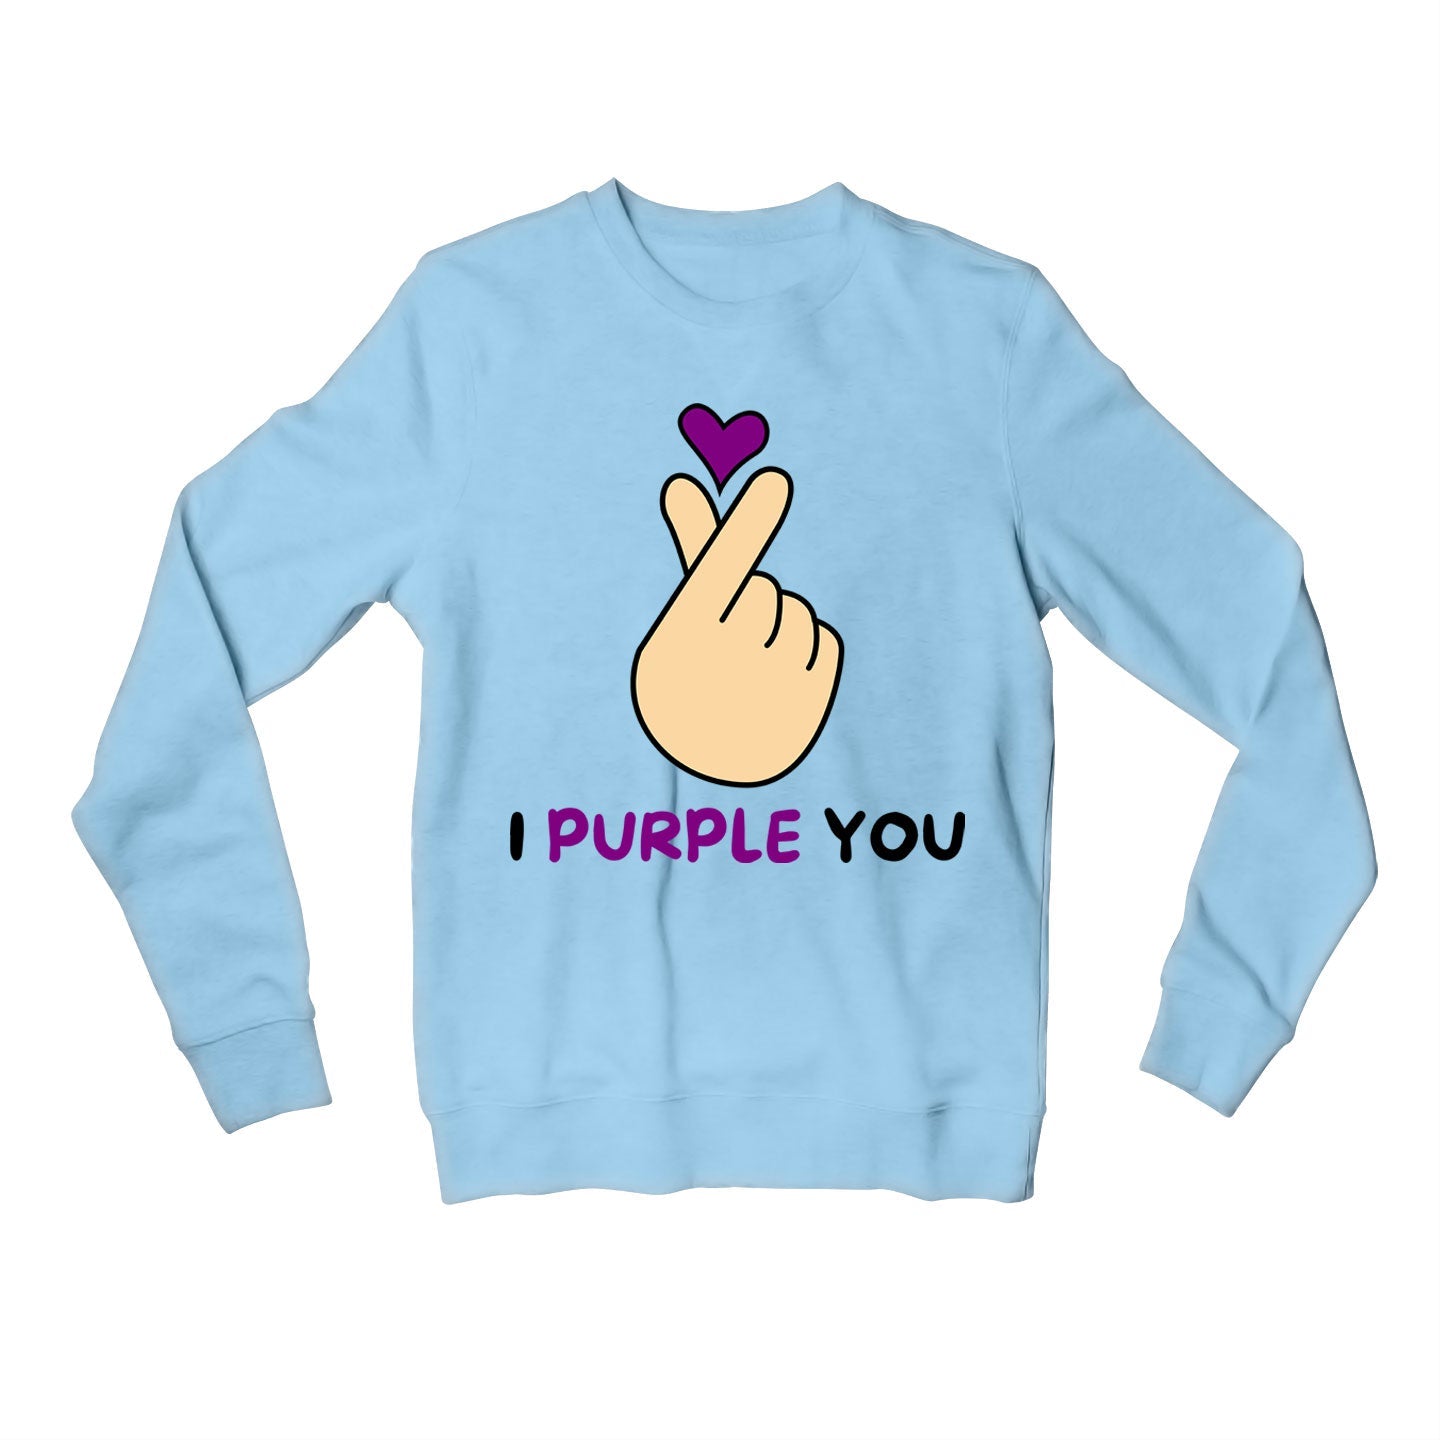 bts i purple you sweatshirt upper winterwear music band buy online india the banyan tee tbt men women girls boys unisex baby blue 